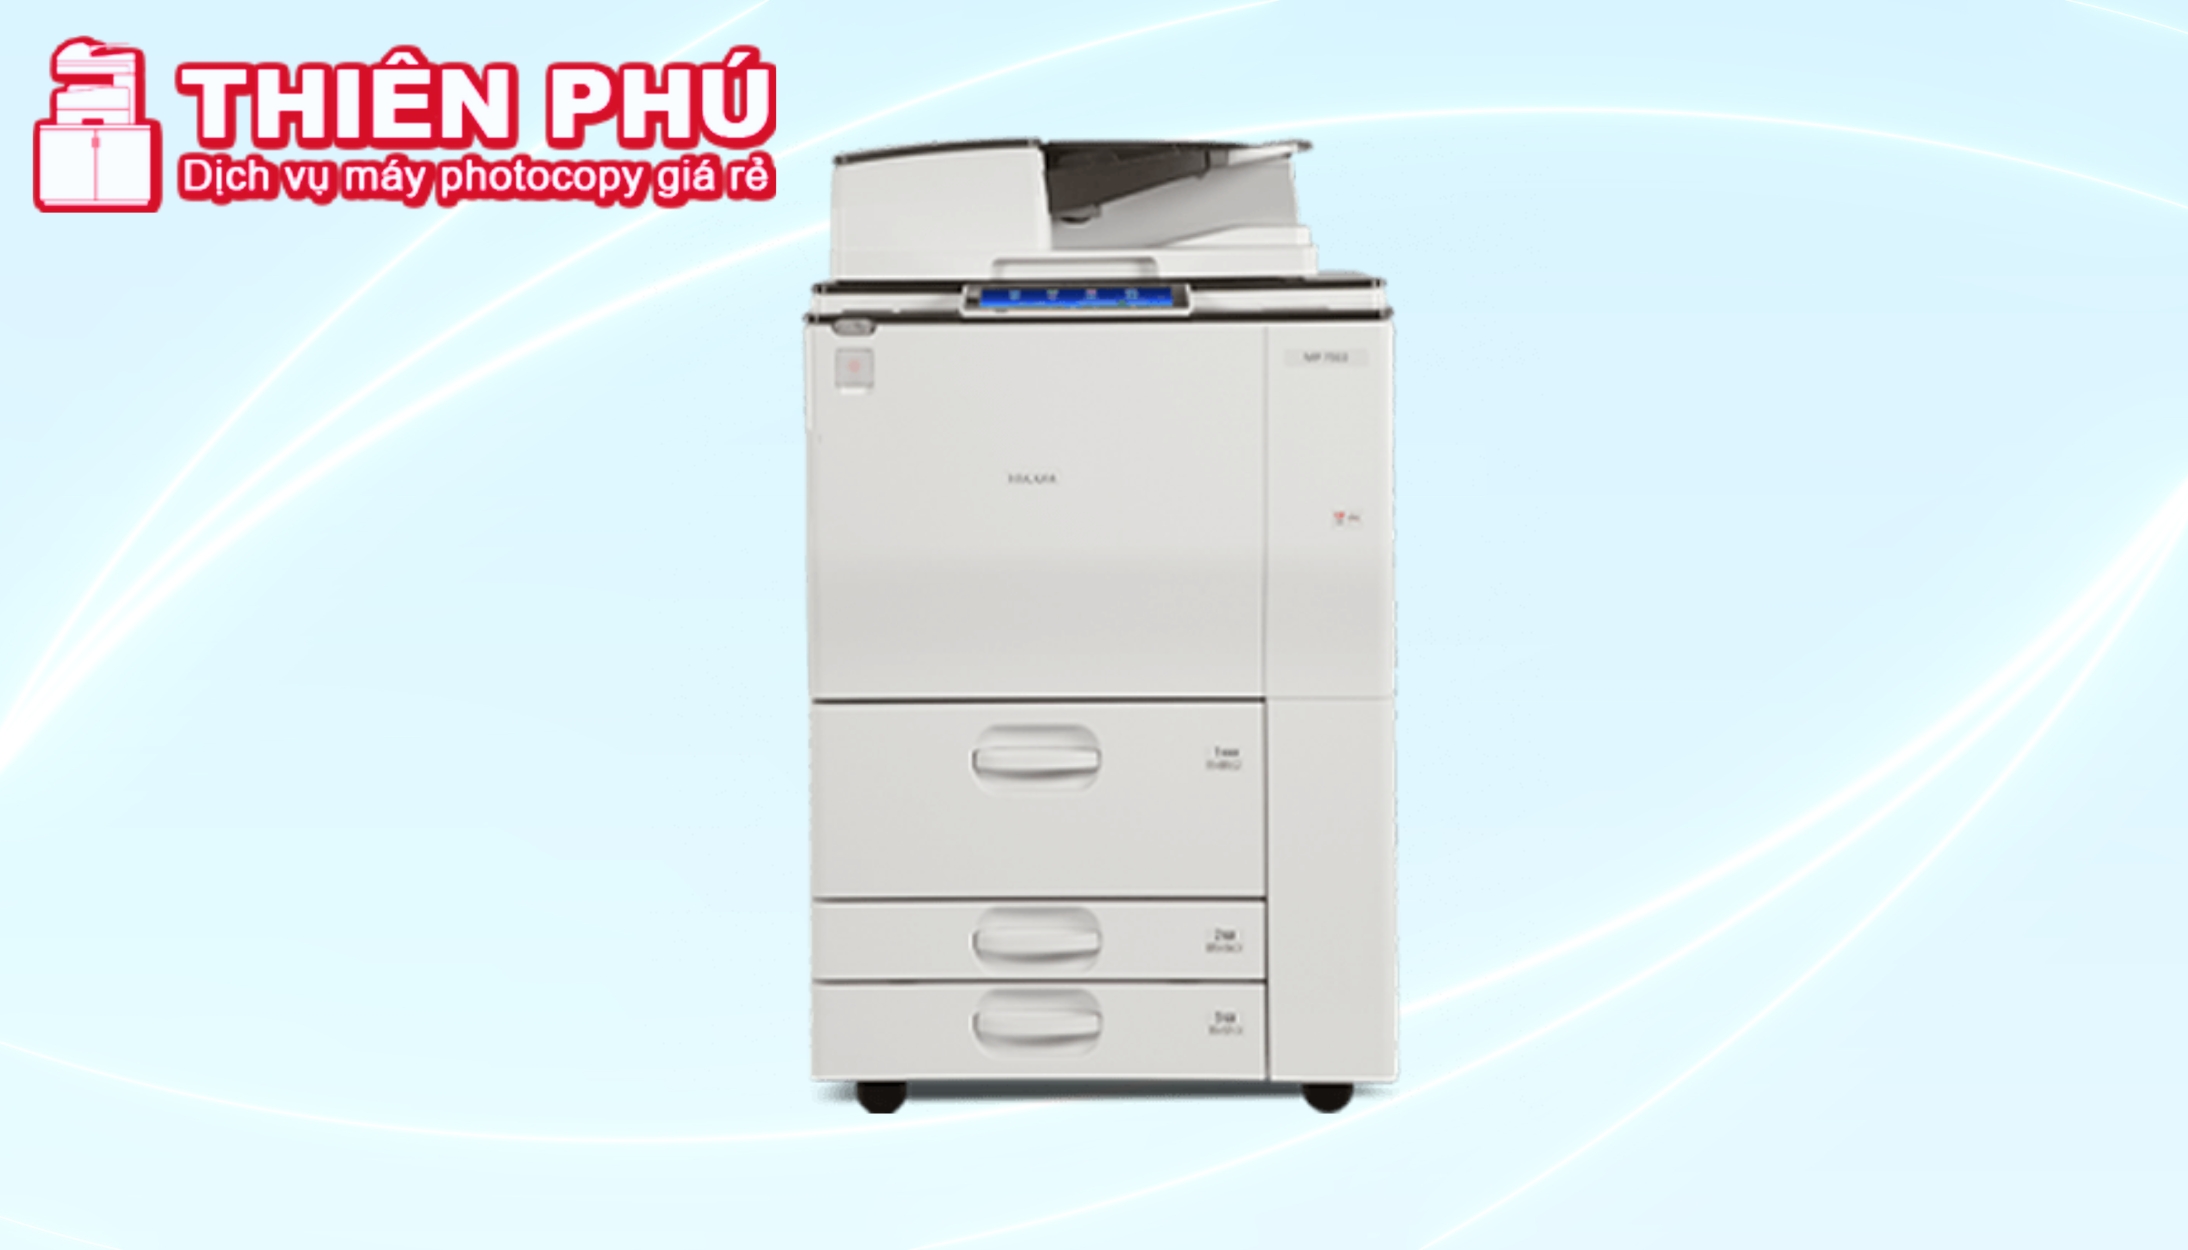 Tính năng nổi bật của máy photocopy Ricoh MP 7502